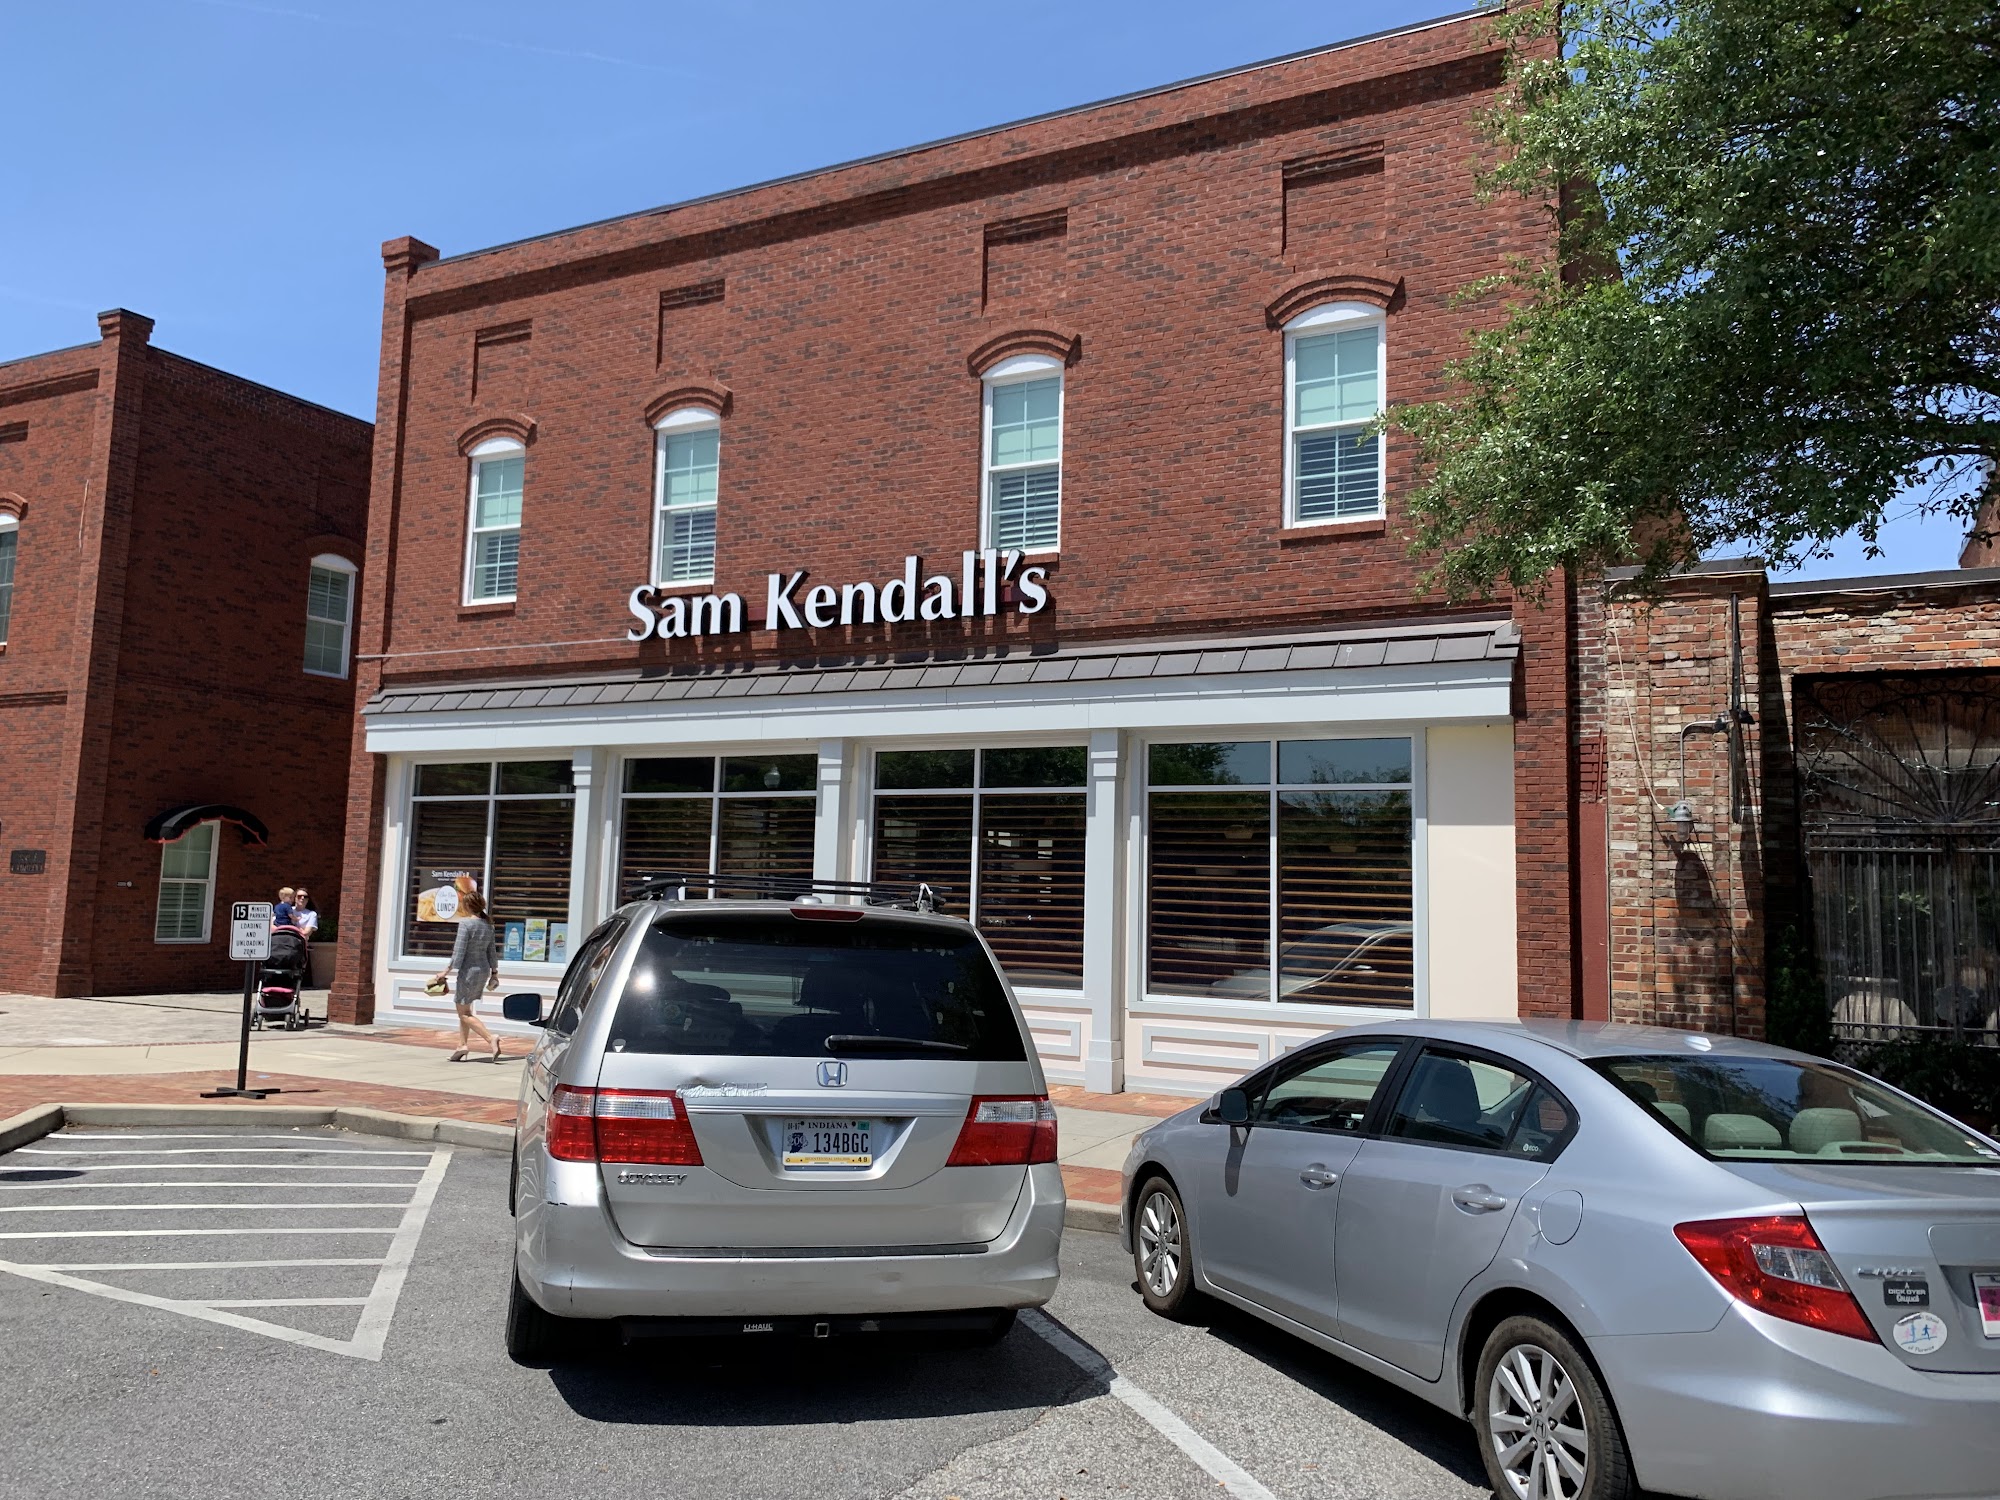 Sam Kendall's